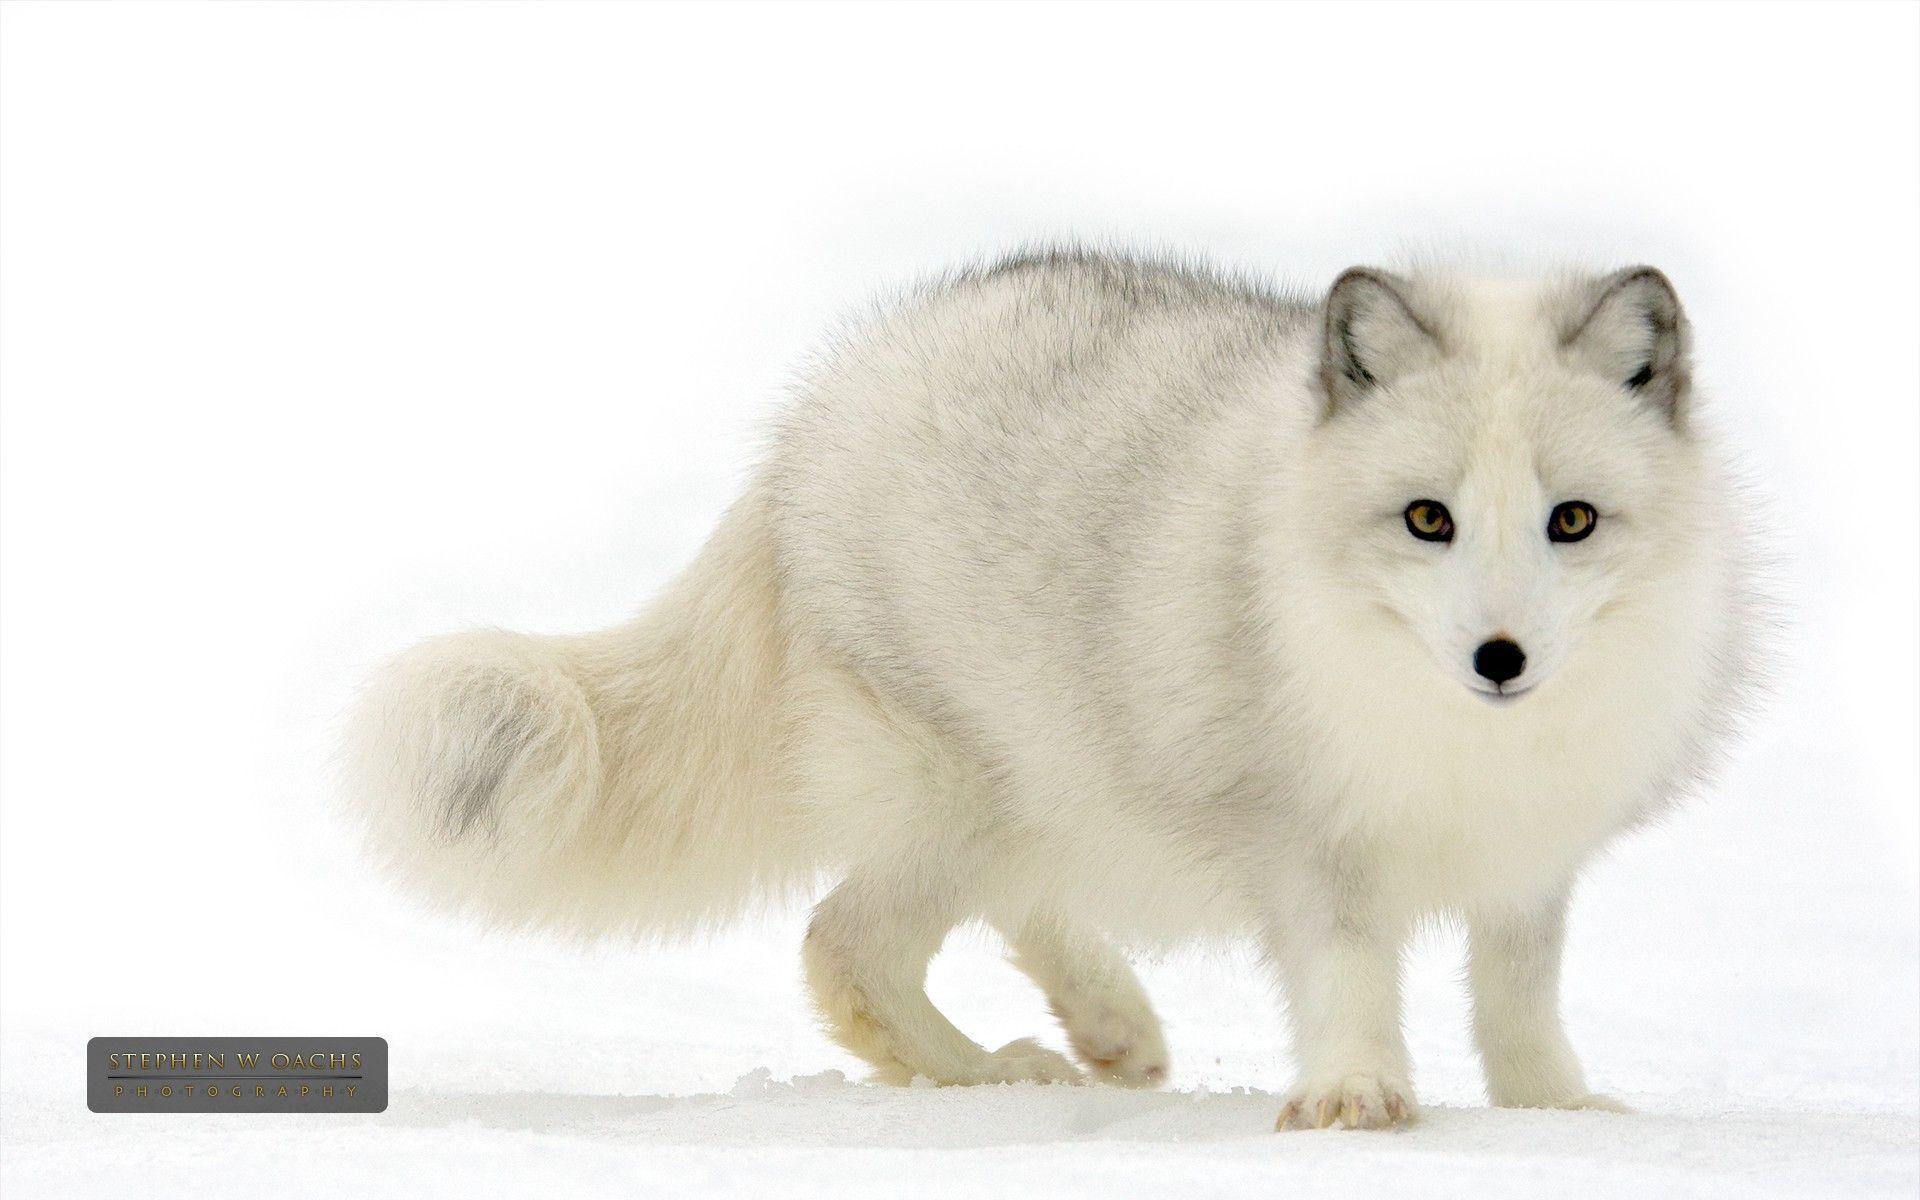 Wallpaper ID 111811  animals arctic fox snow free download